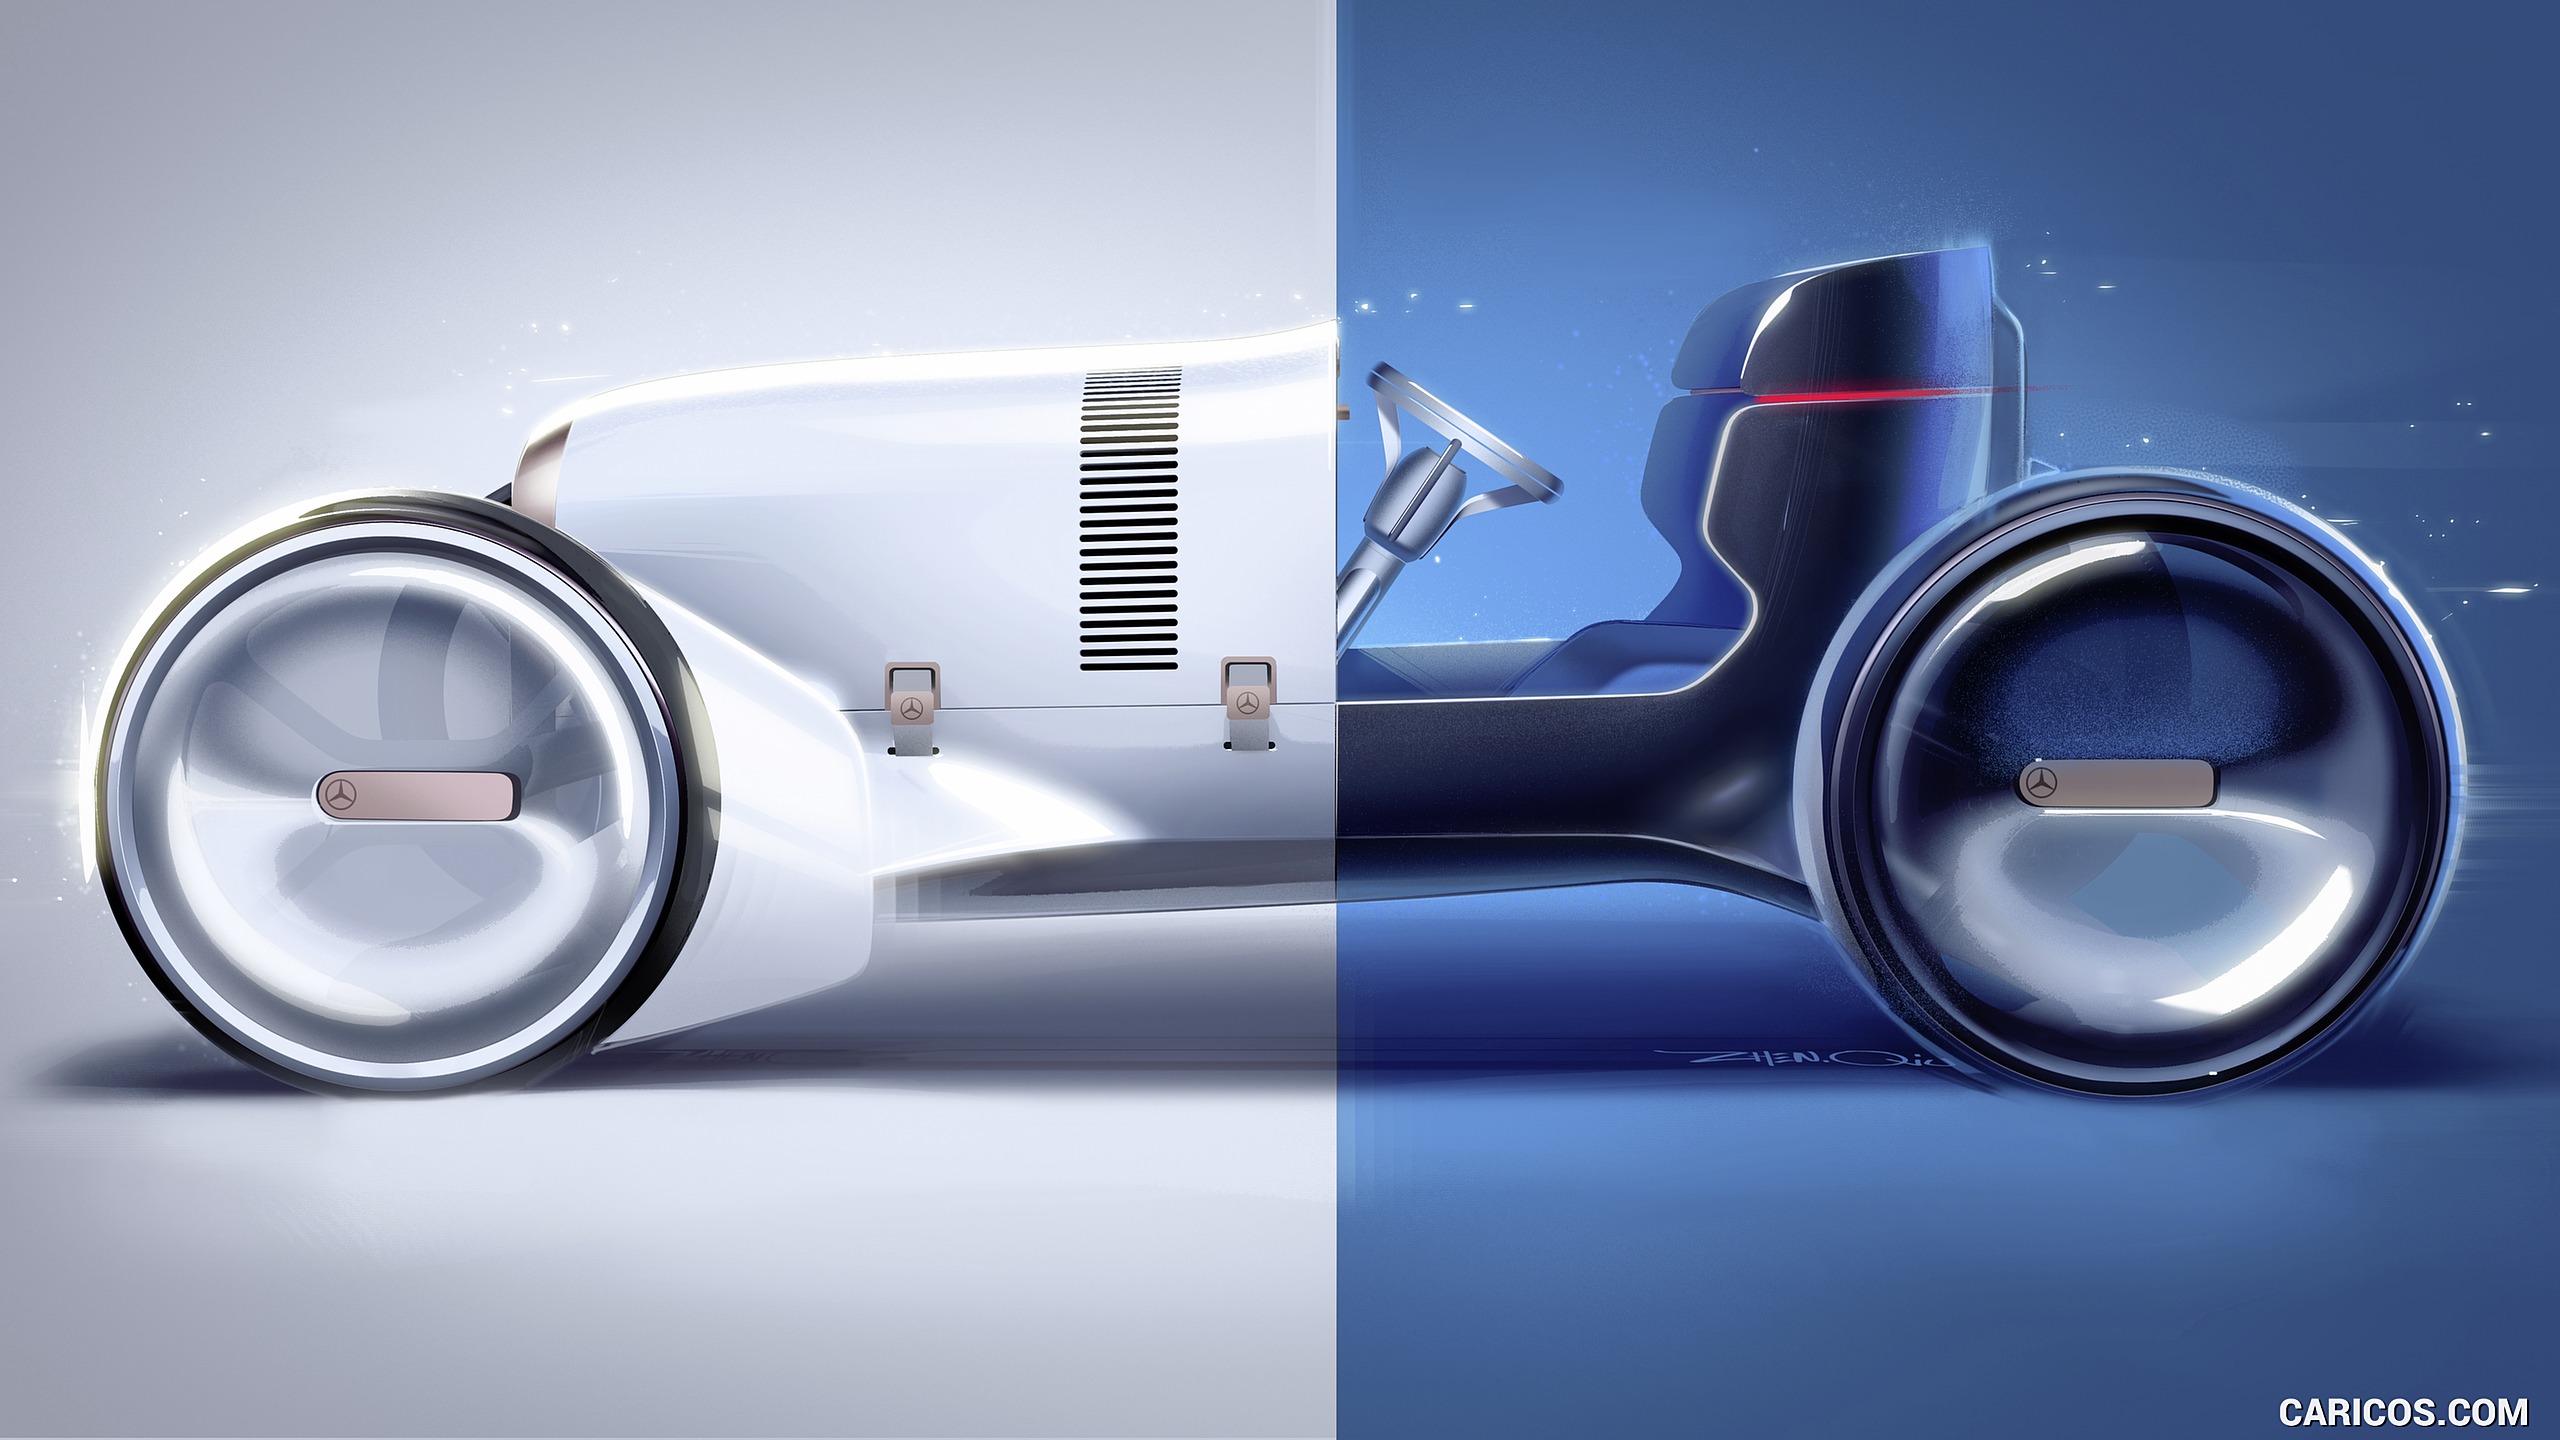 2019 Mercedes-Benz Vision Mercedes Simplex Concept - Design Sketch, #13 of 20